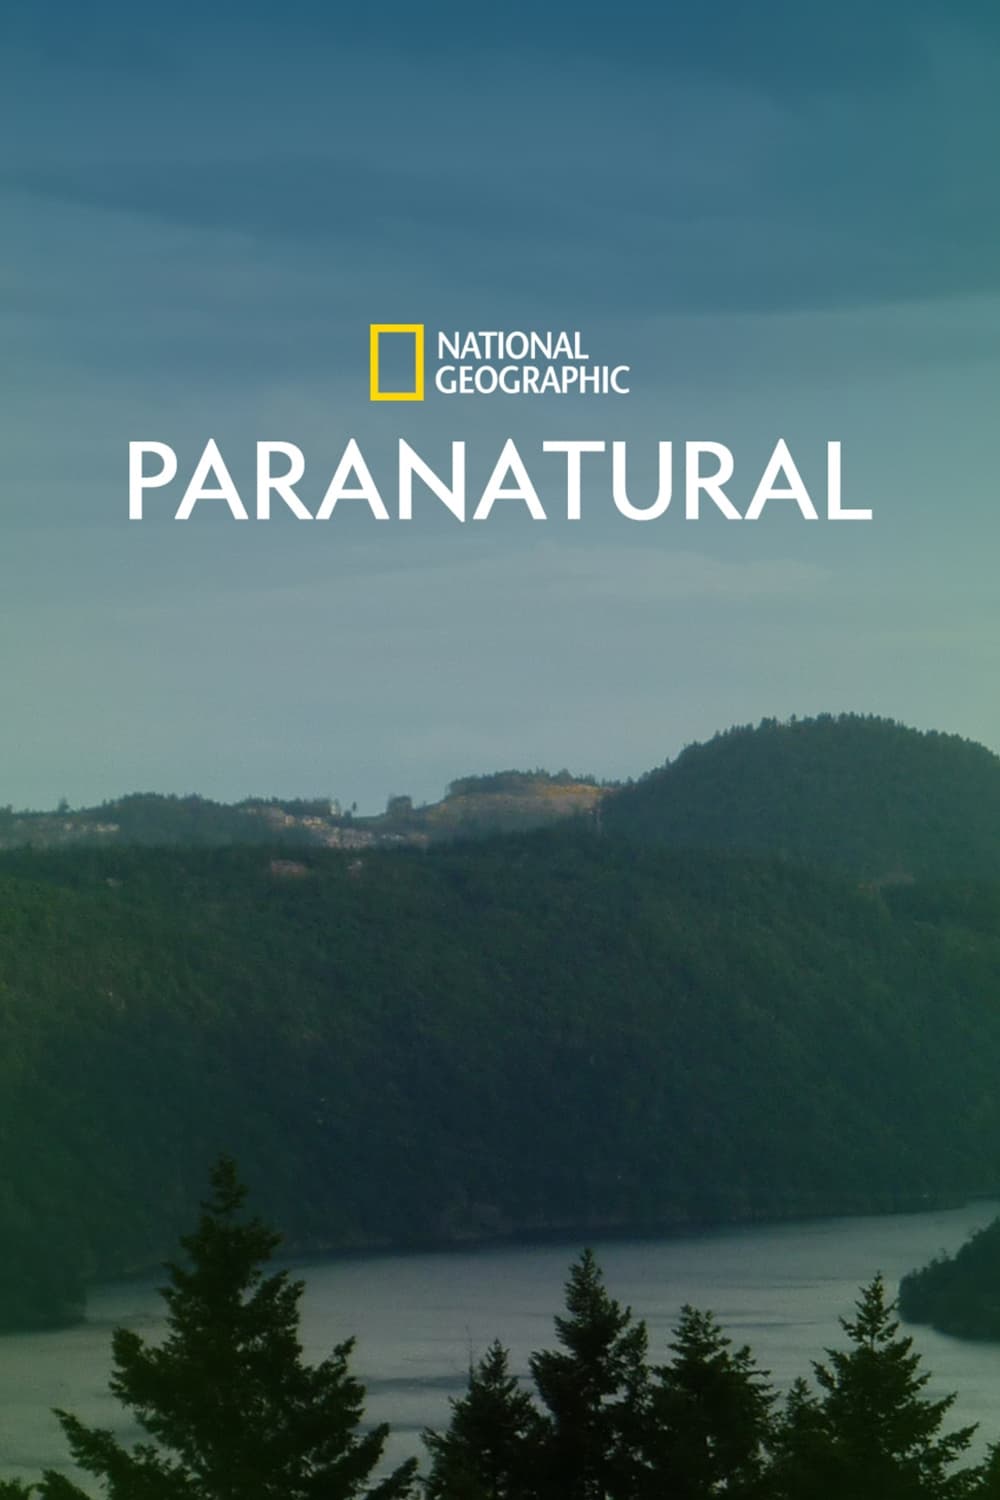 Paranatural TV Shows About Substance